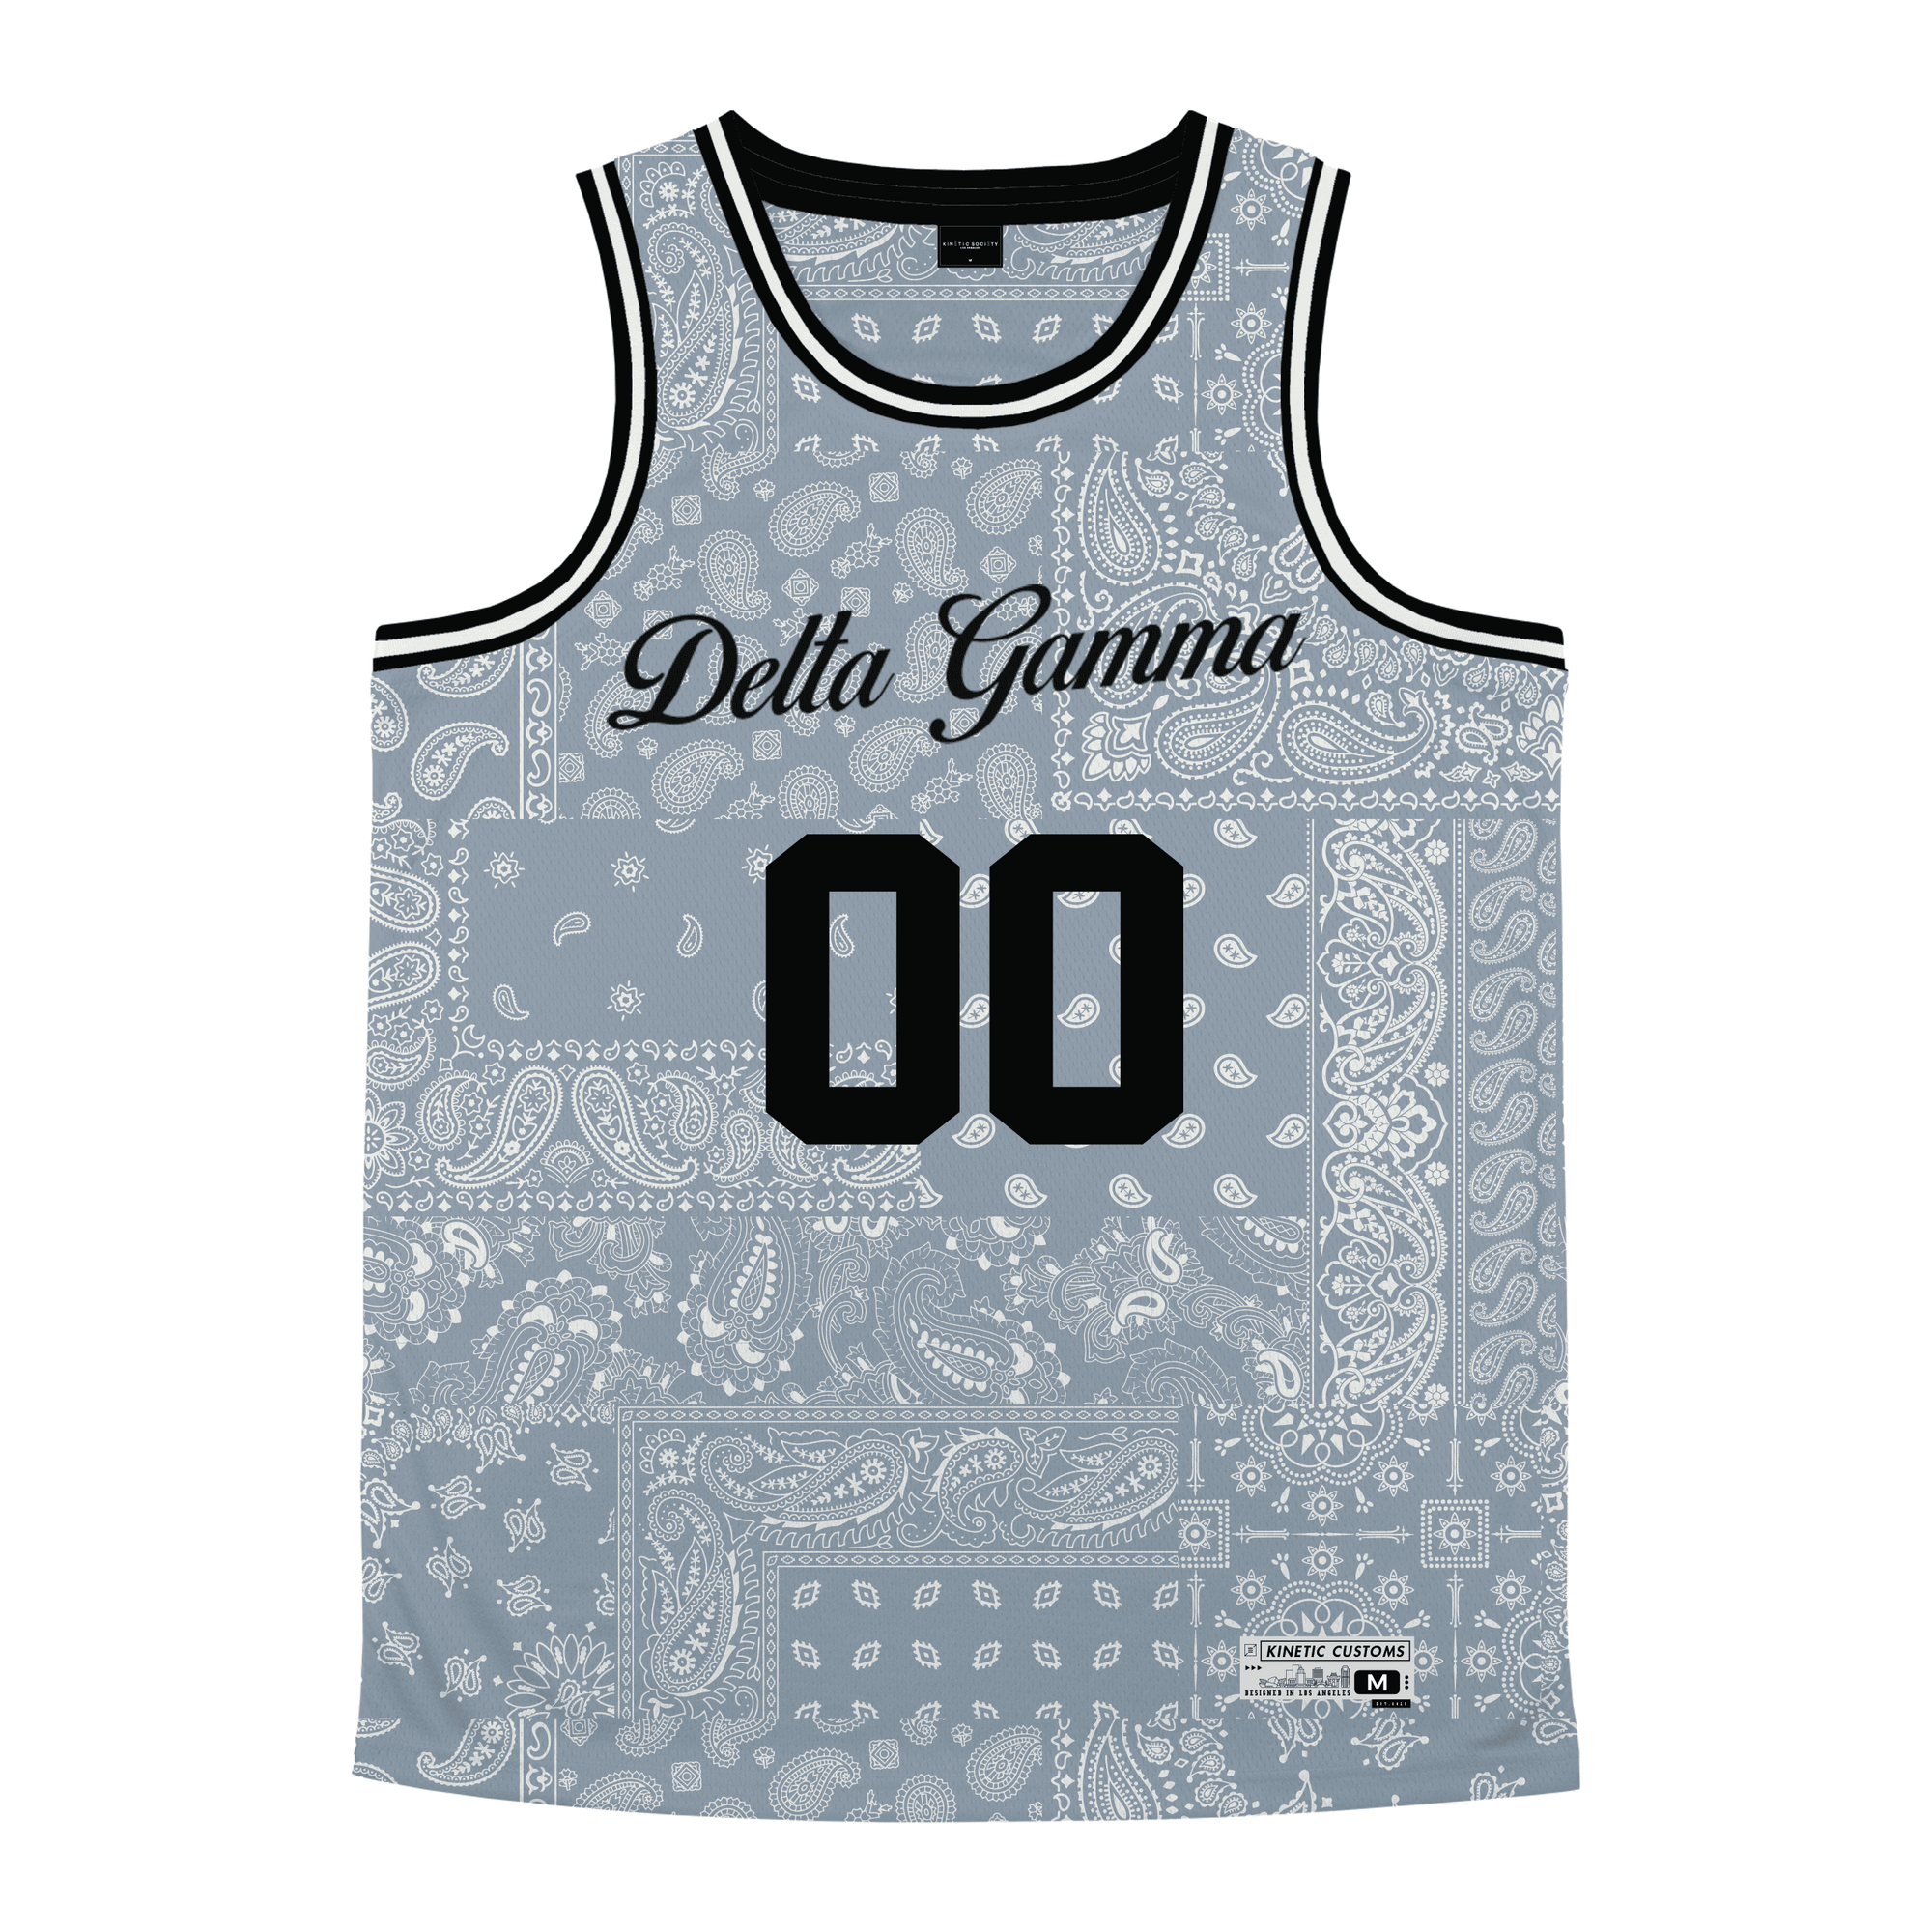 Delta Gamma - Slate Bandana - Basketball Jersey